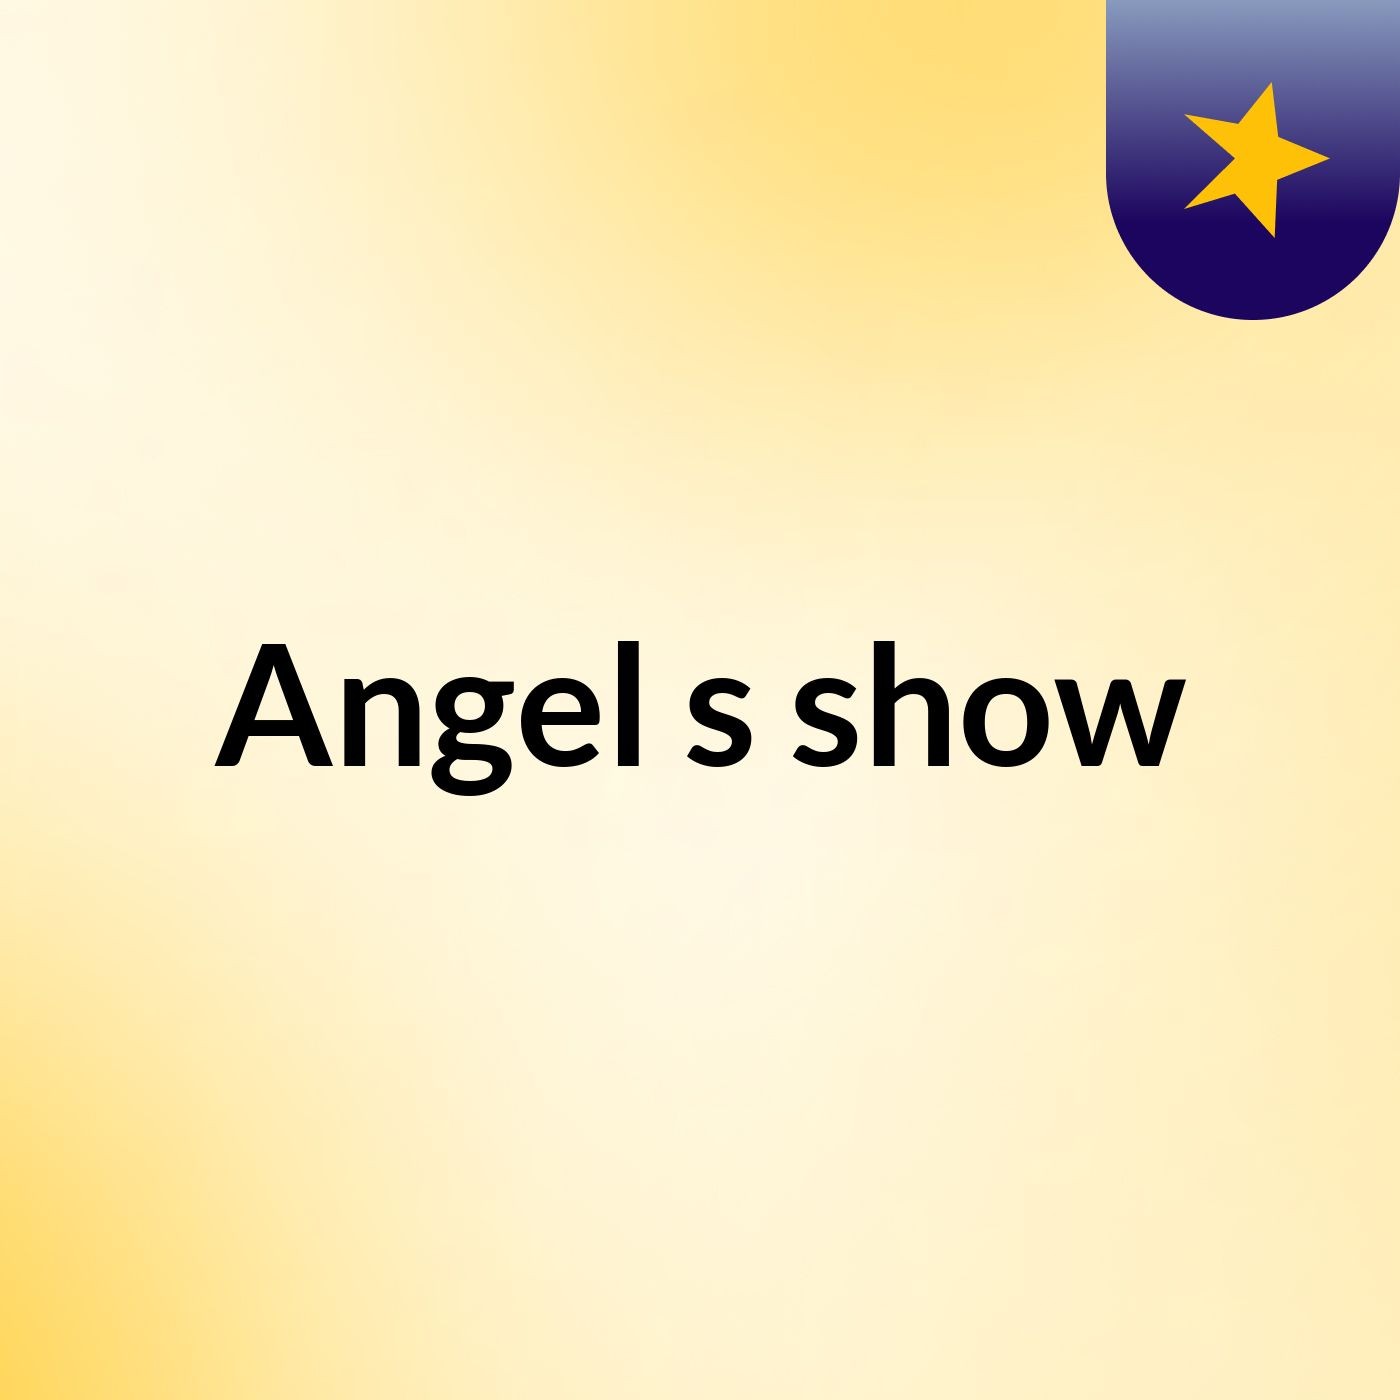 Angel's show